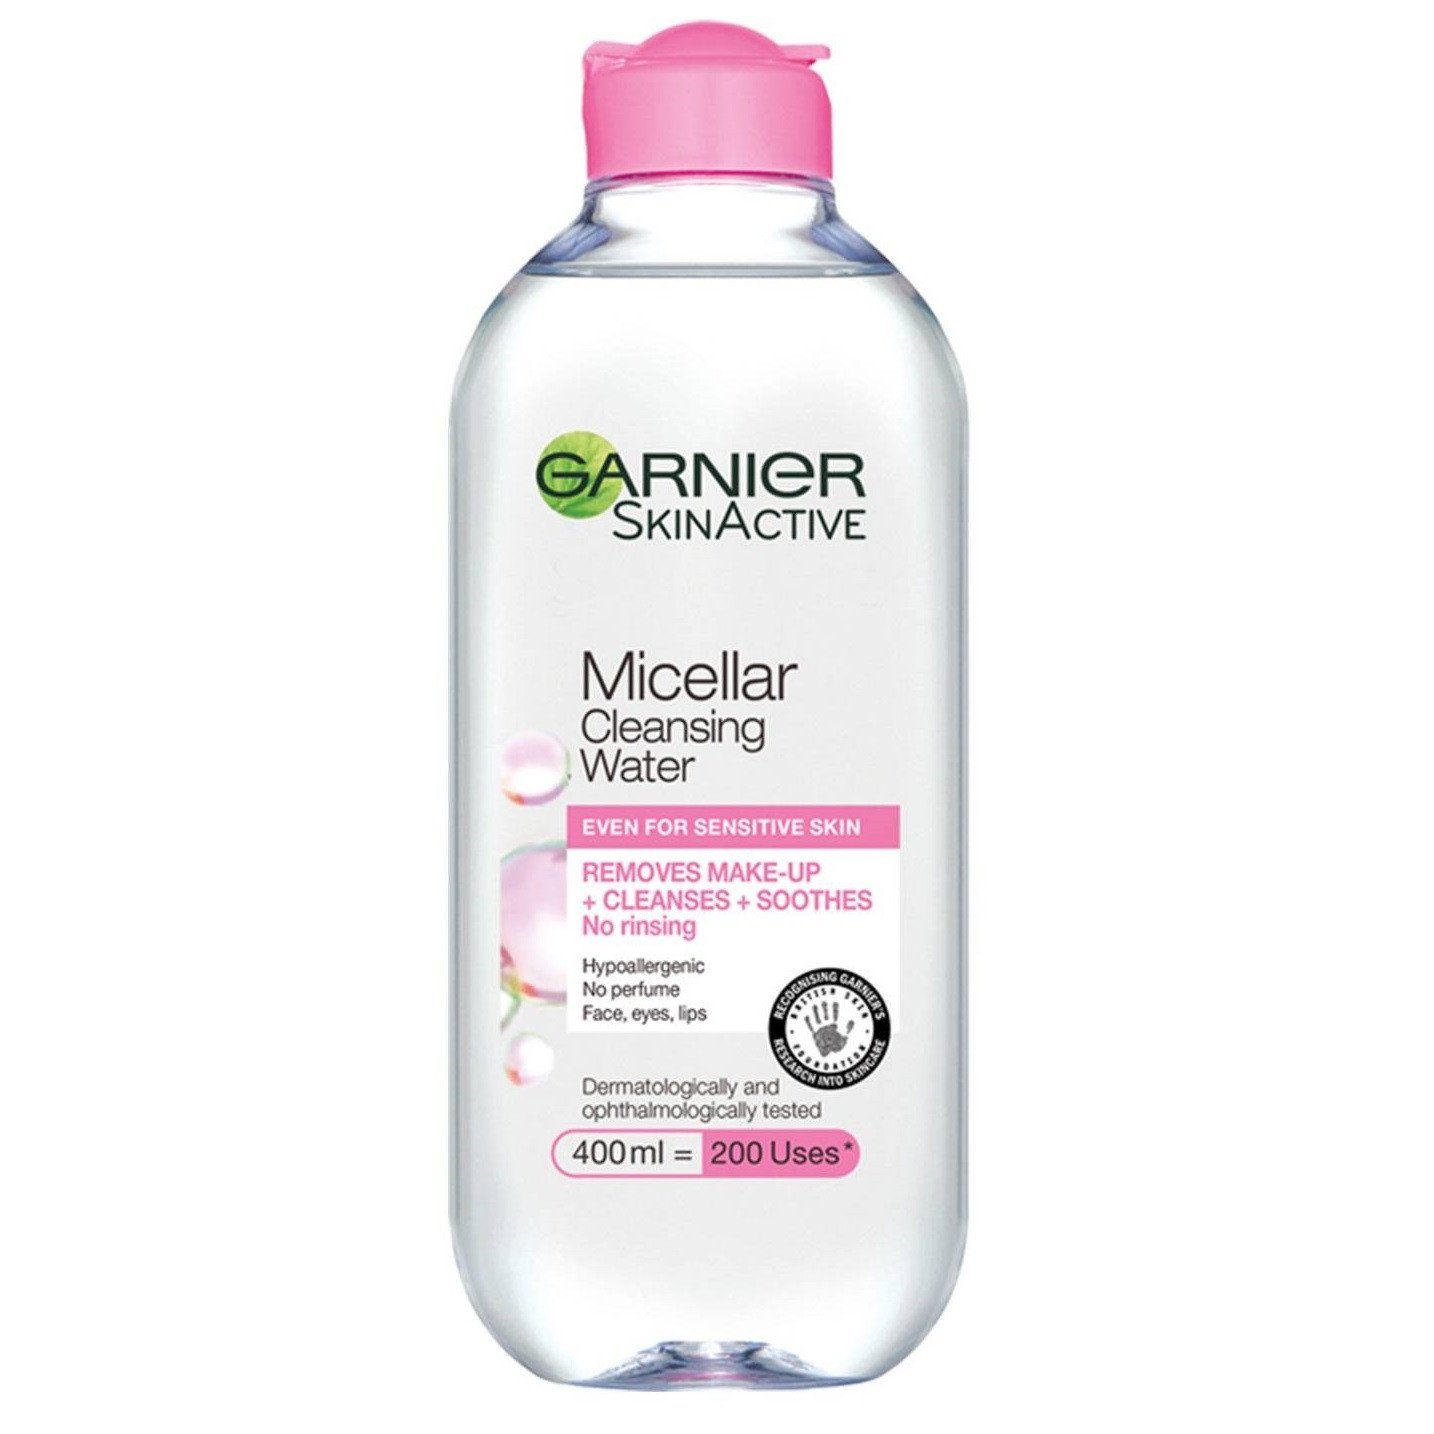 Garnier cleansing micellar